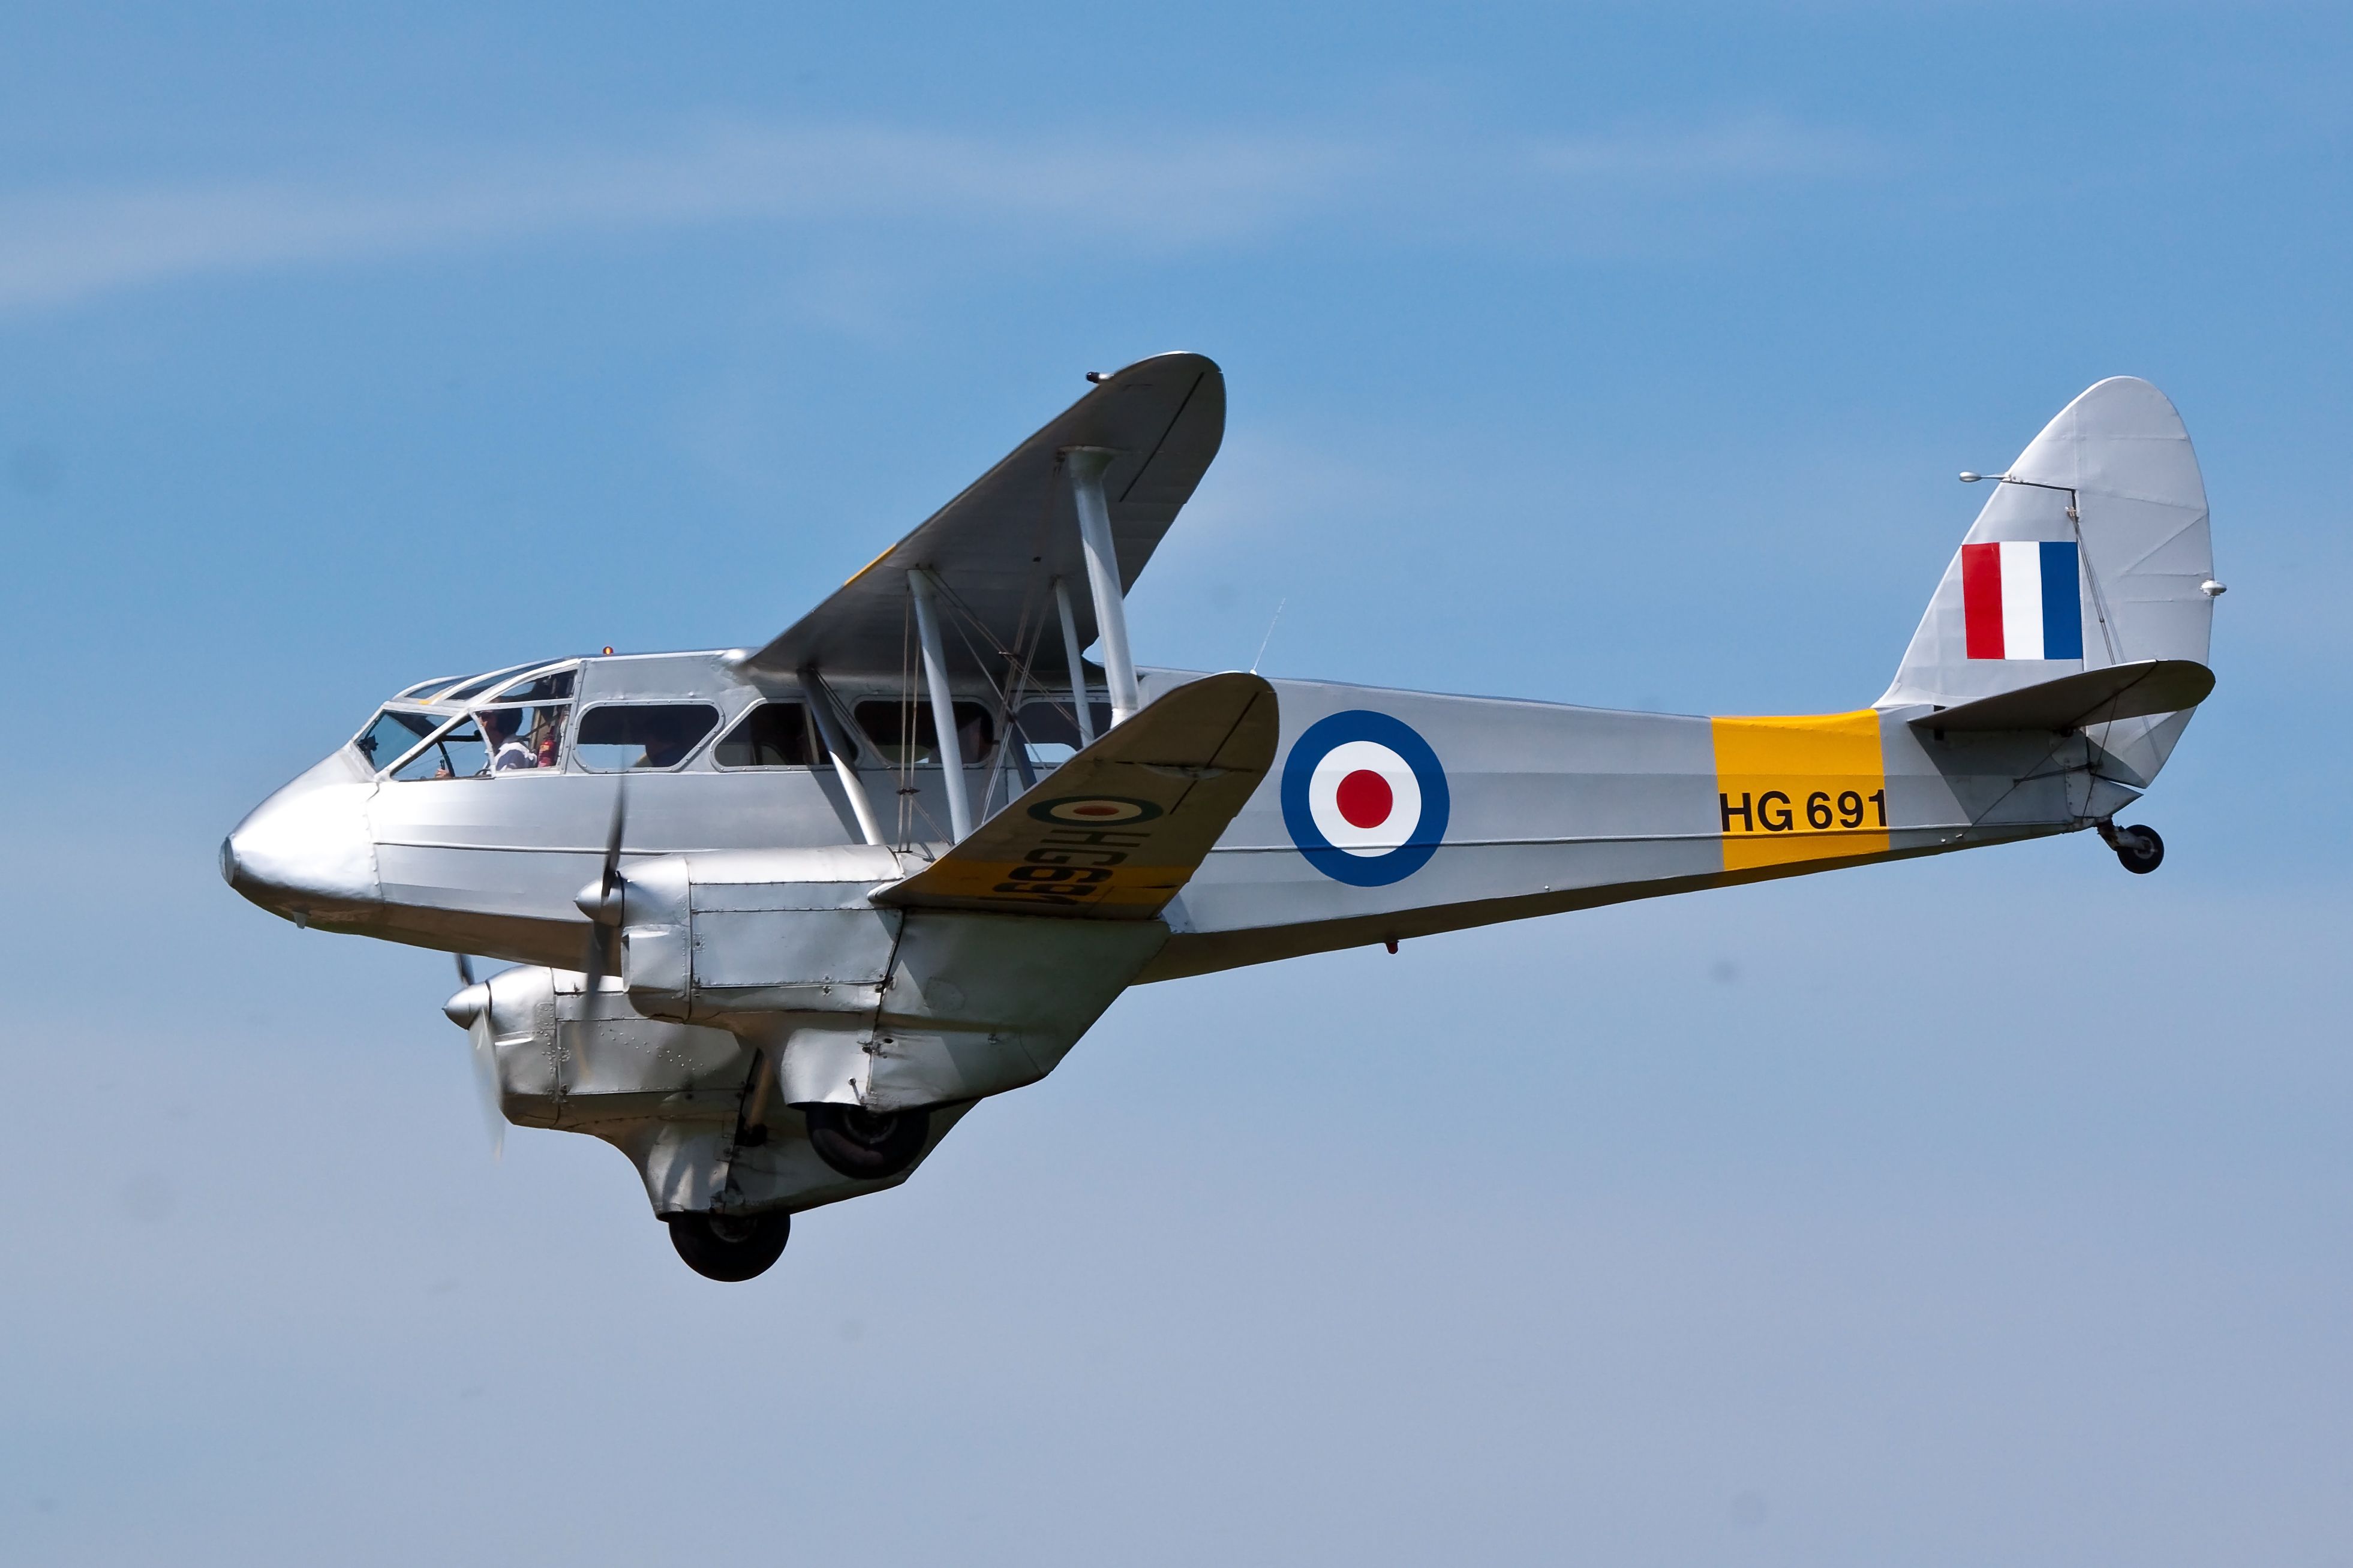 An RAF De Havilland Dragon Rapide Flying in the sky.